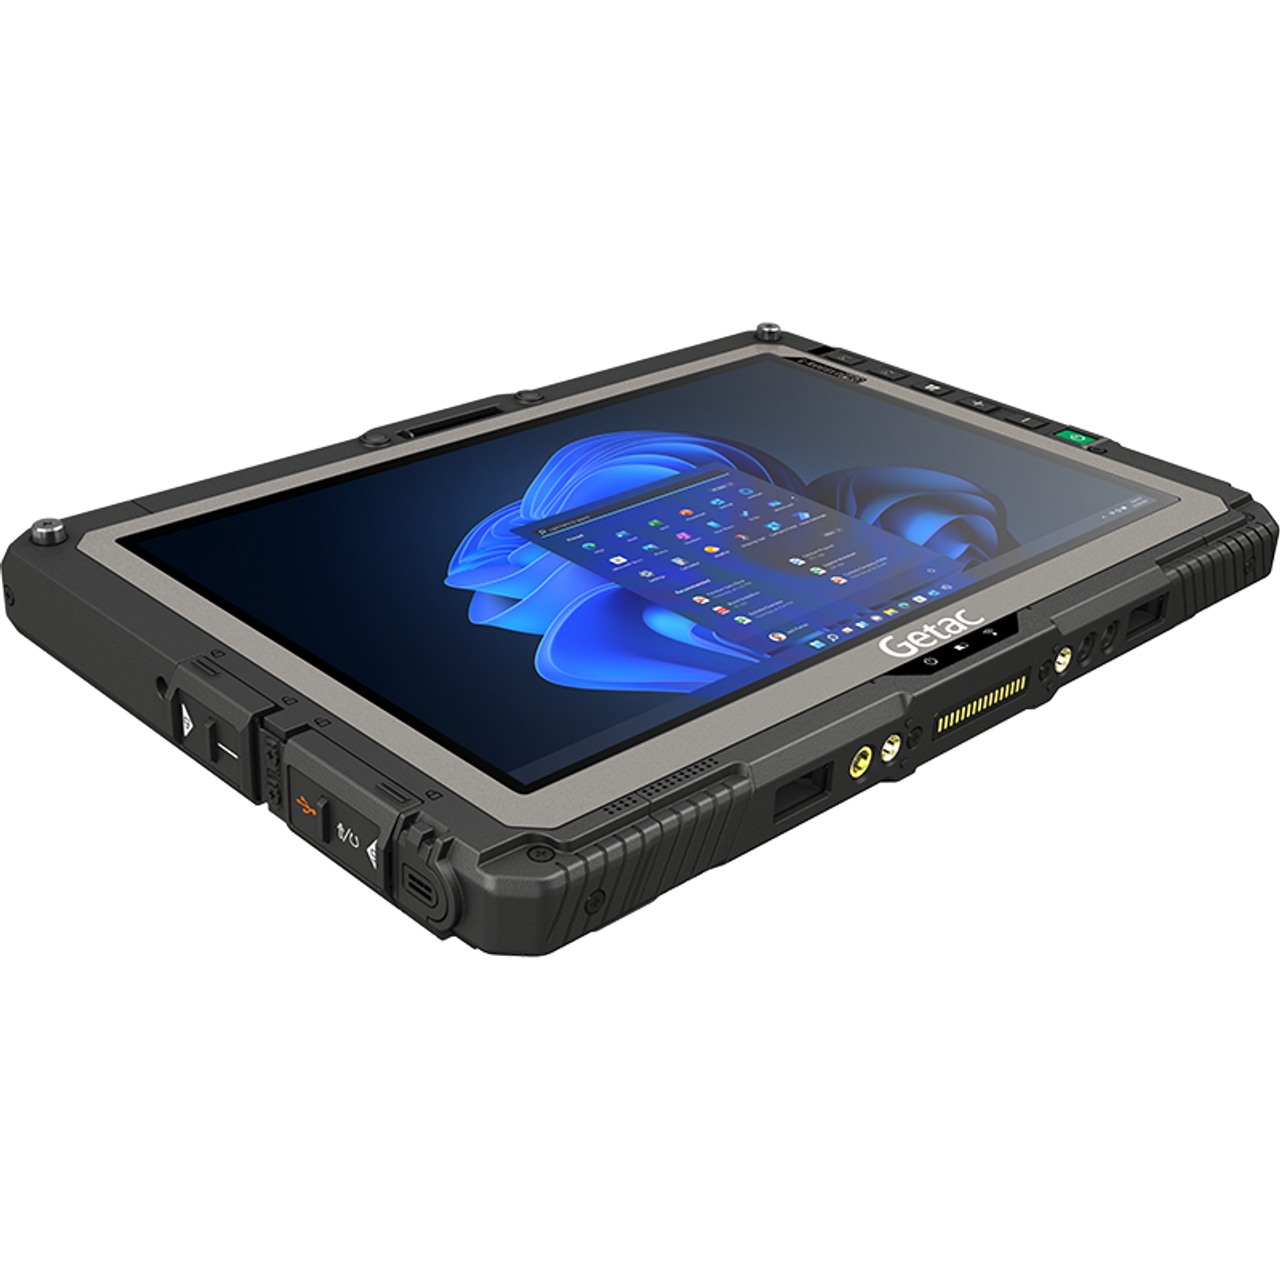 Getac UX10G2-R TAA i5-10310U vPro, W/Webcam High cap Battery , Win10 Pro x64 w/16GB RAM + TAA, 256GB PCIe SSD, SR FHD LCD + Touchscreen stylus + Rear Camera, US Power Cord, WIFI + BT + 4G LTE (EM7455) w/ GPS, RS232, 3yb2b